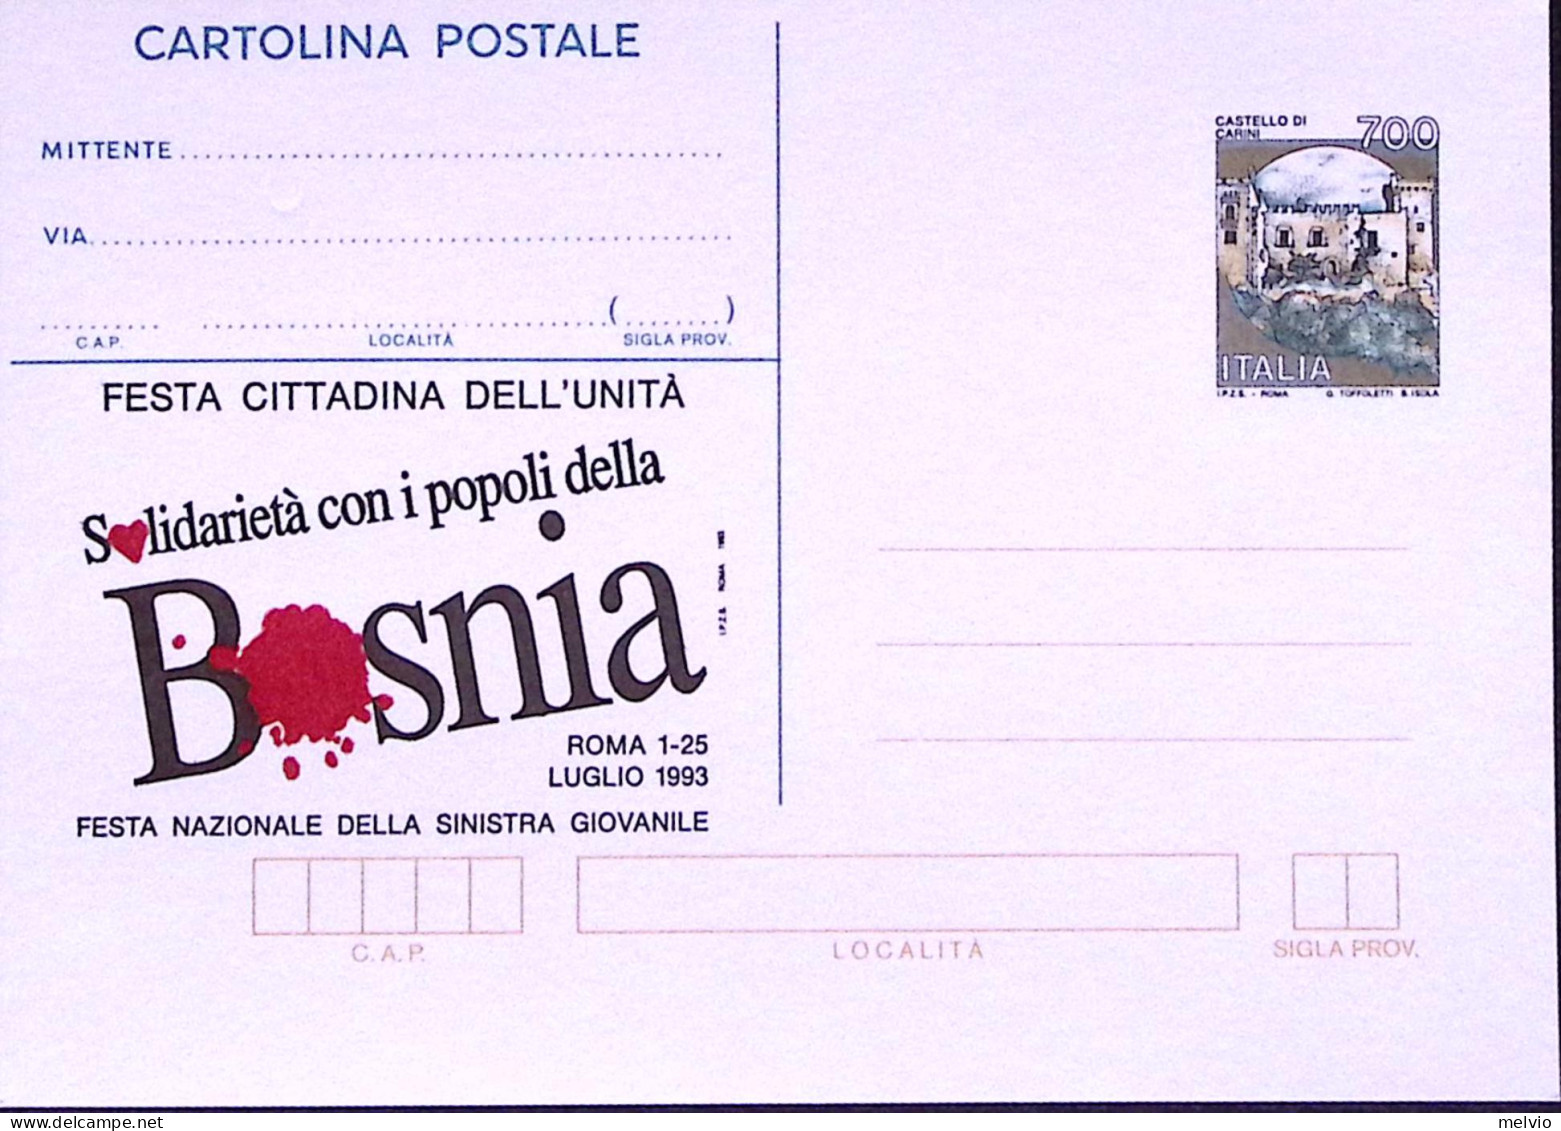 1993-BOSNIA Cartolina Postale Castelli Lire 700,nuova - Interi Postali